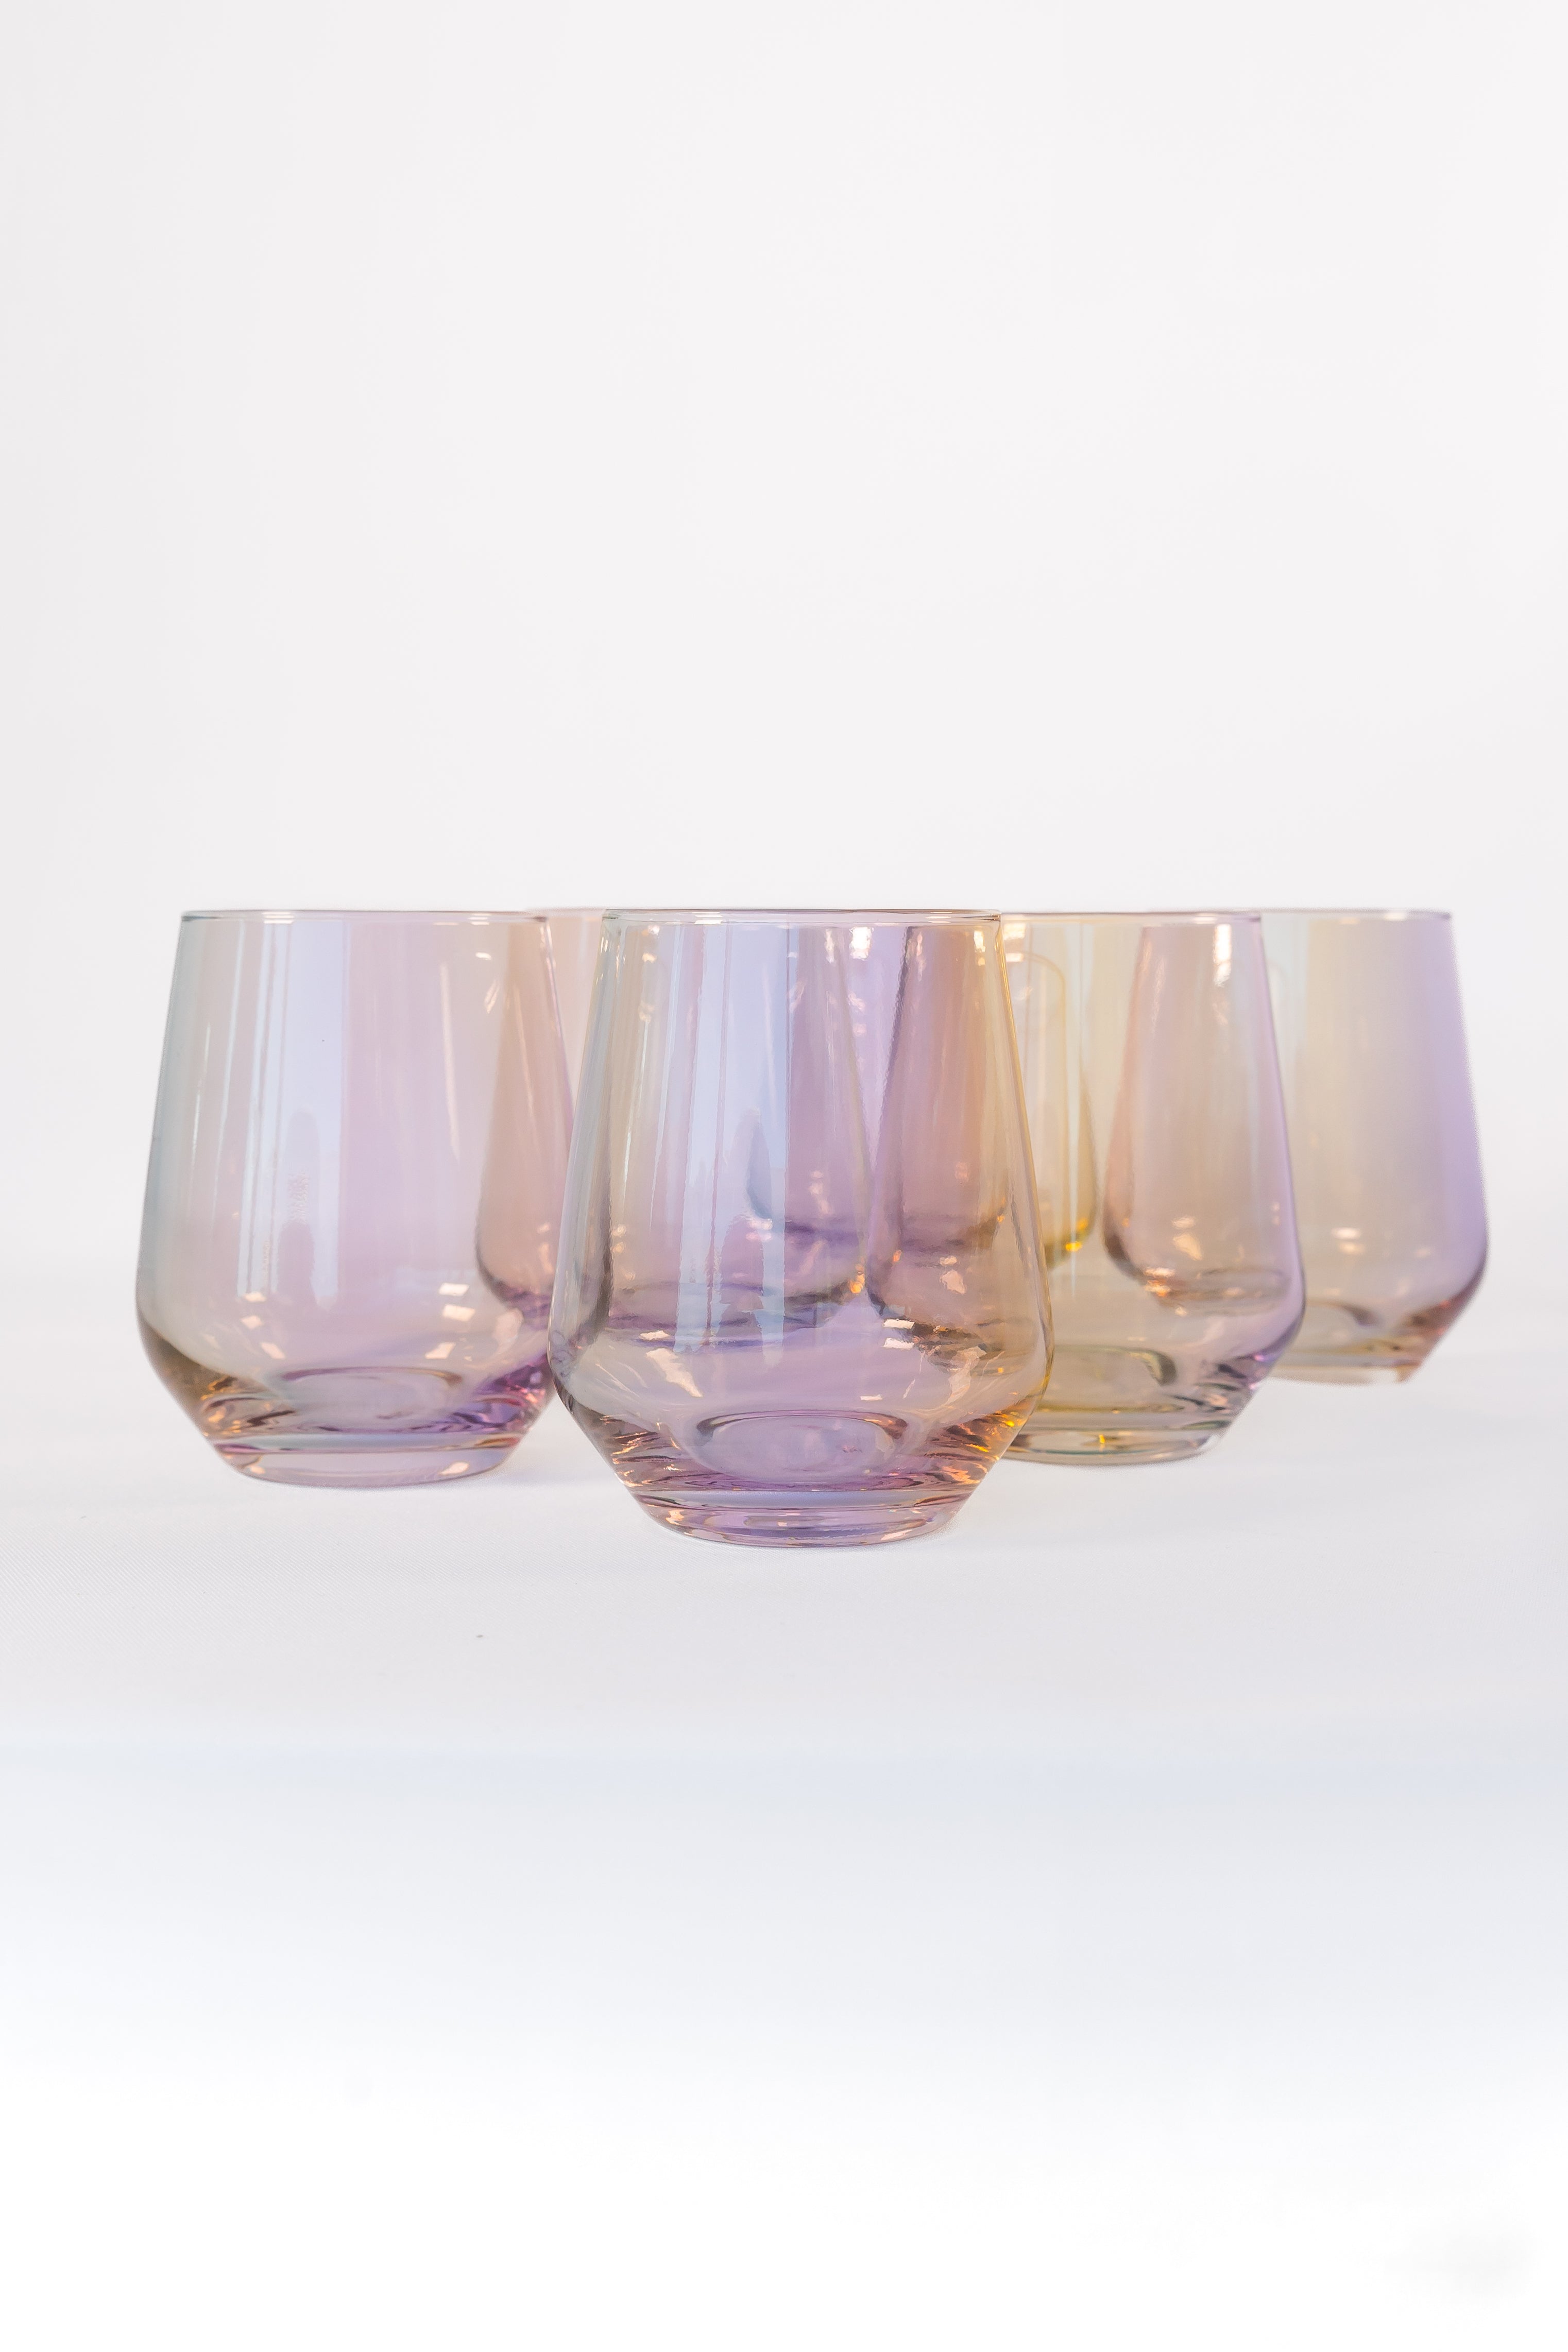 Iridescent stemless wine glasses set of 2/4/6 Unique Cute Gift Idea - Set  of 2